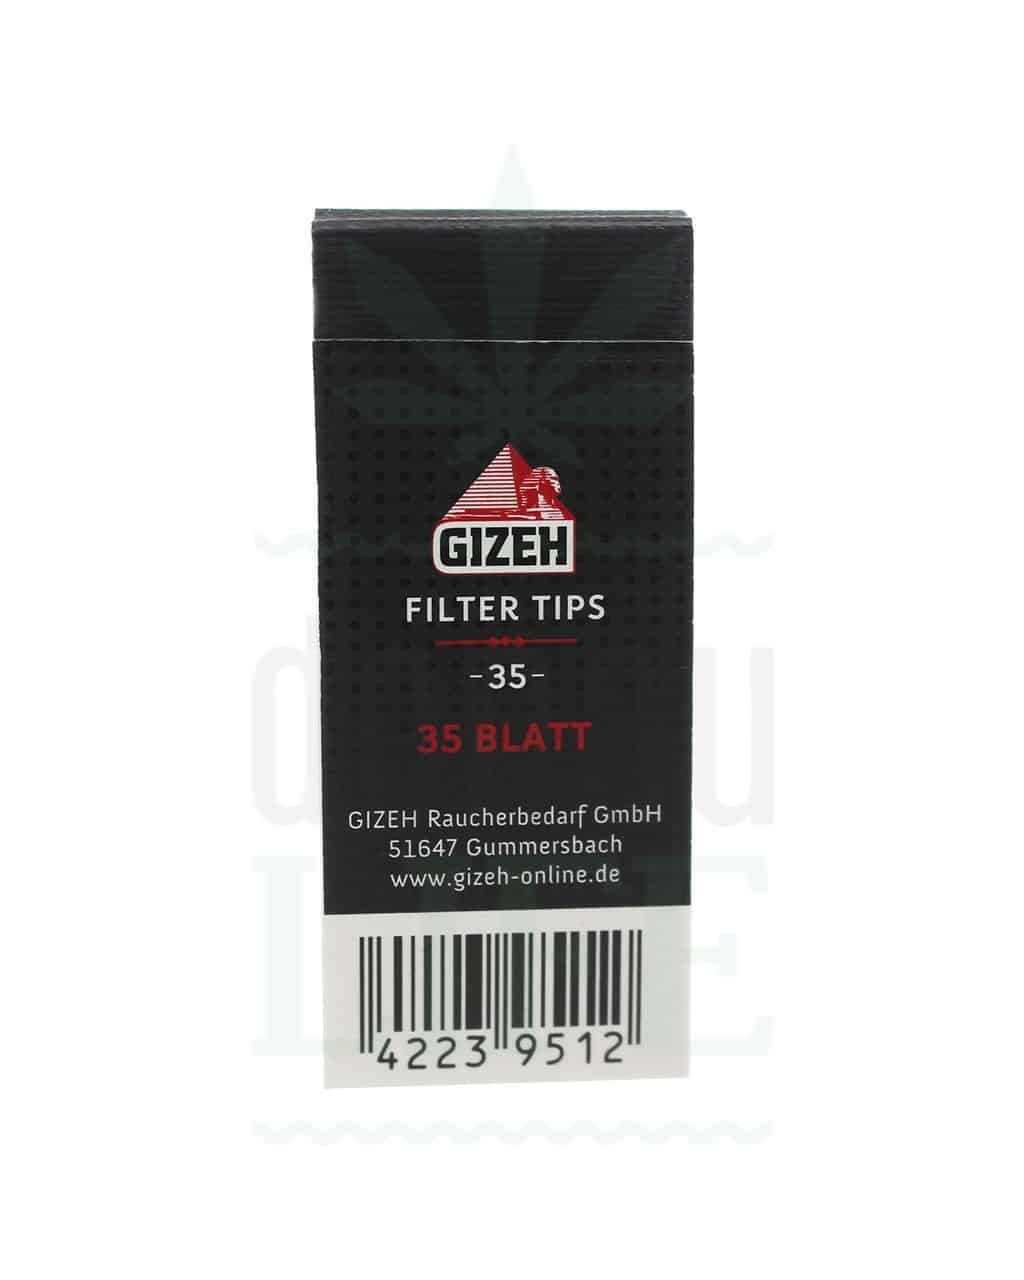 GIZEH Black Filter Tips wide